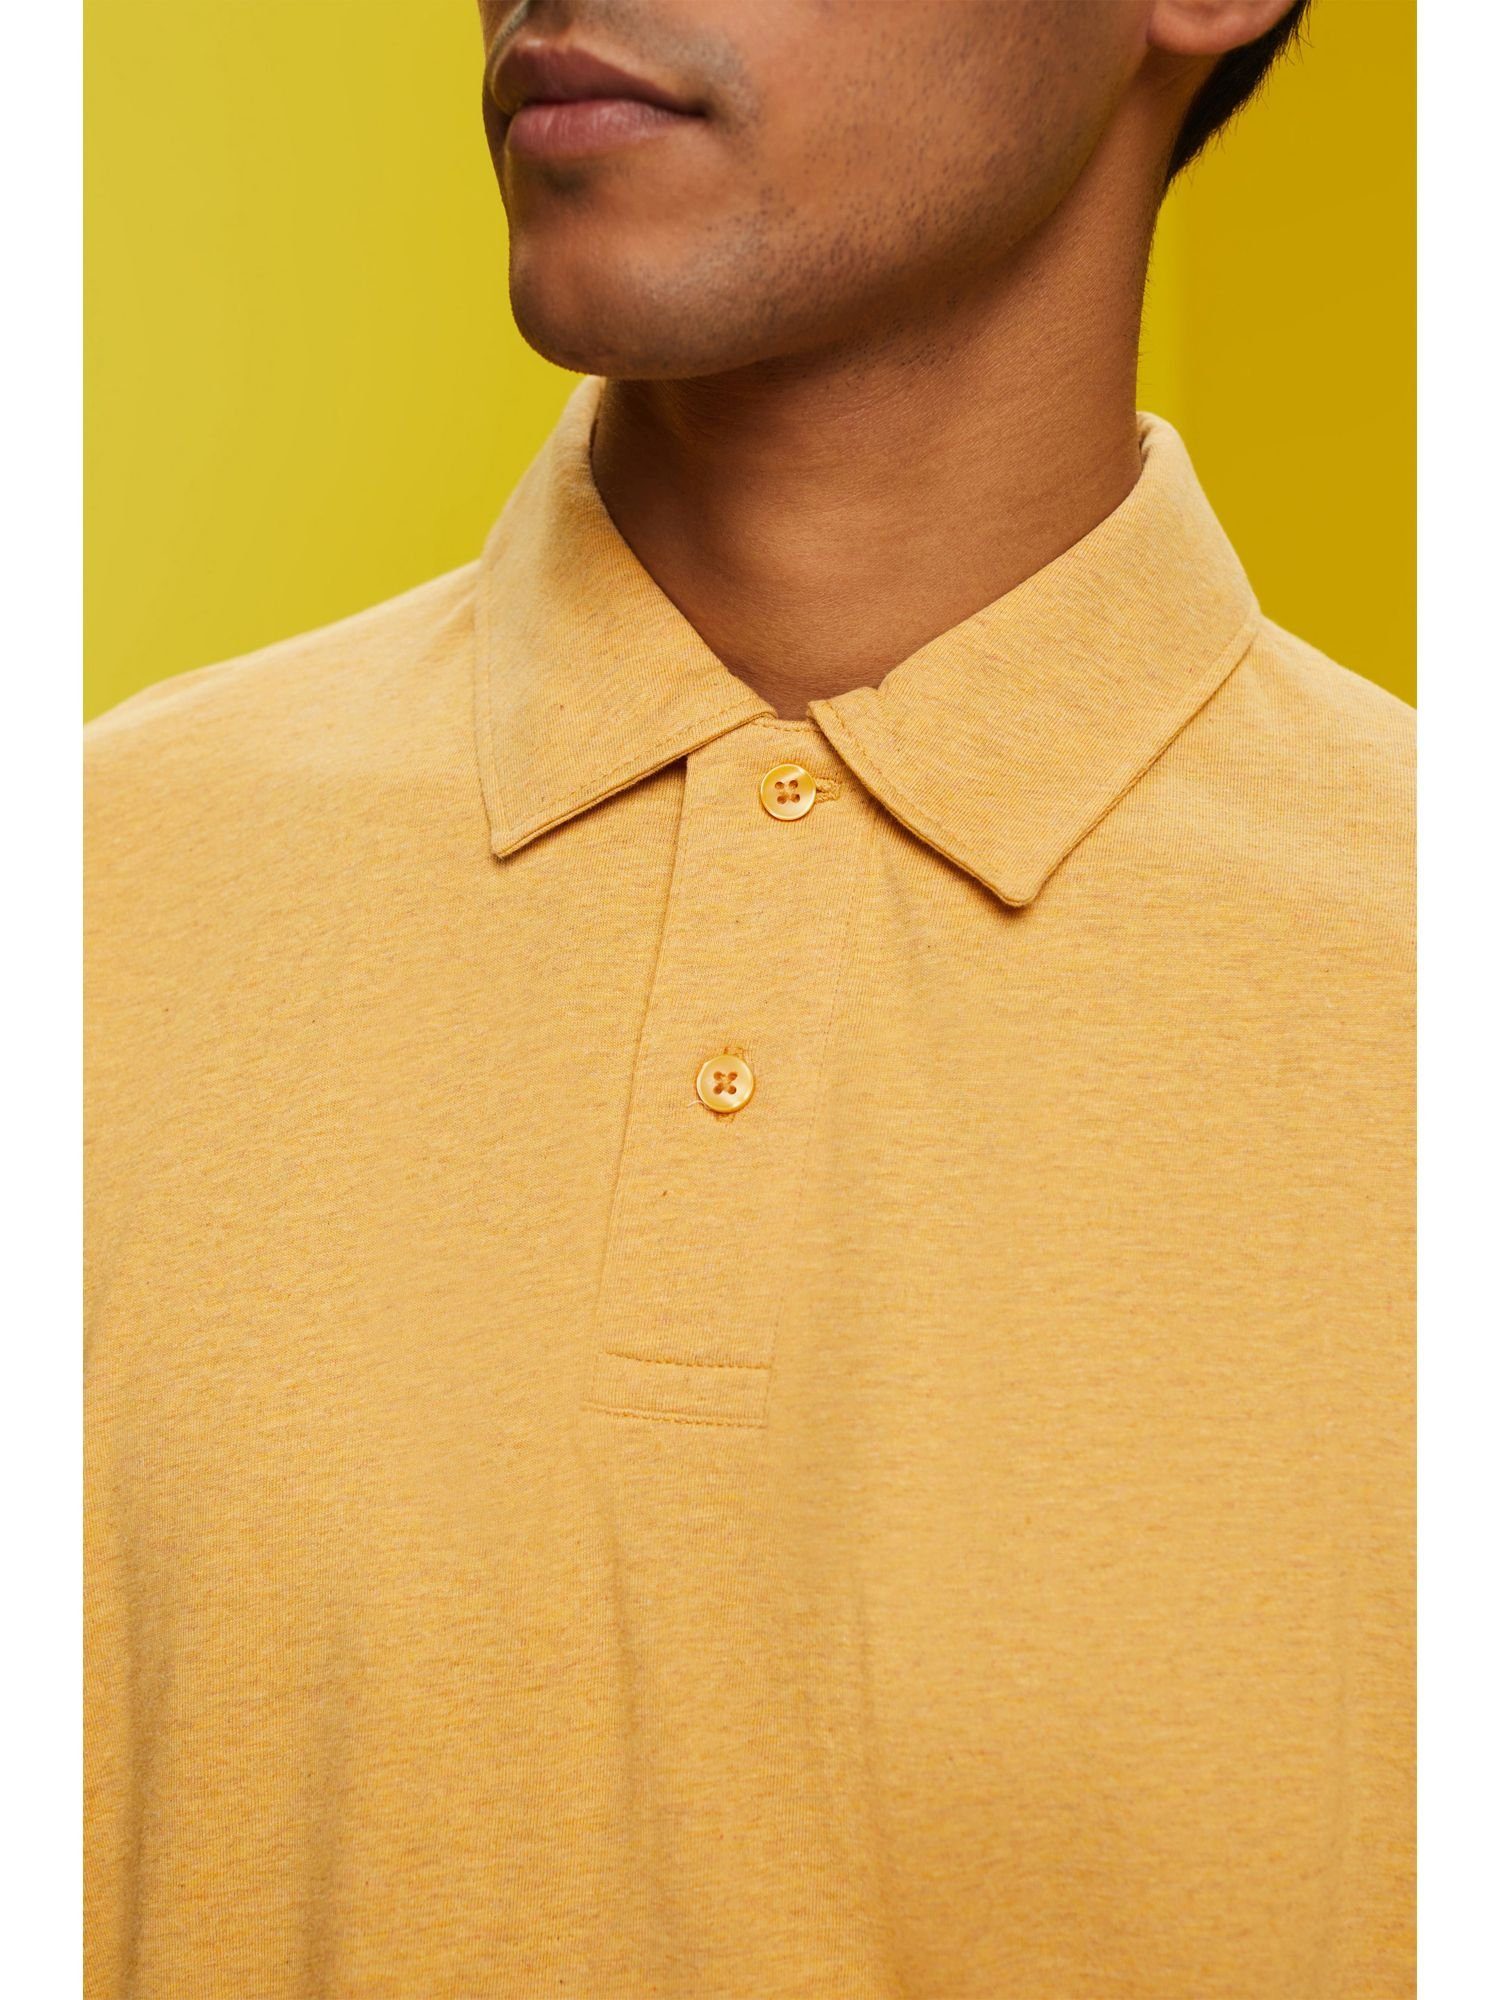 Esprit Poloshirt Hemd mit Baumwolljersey SUNFLOWER Polokragen YELLOW aus